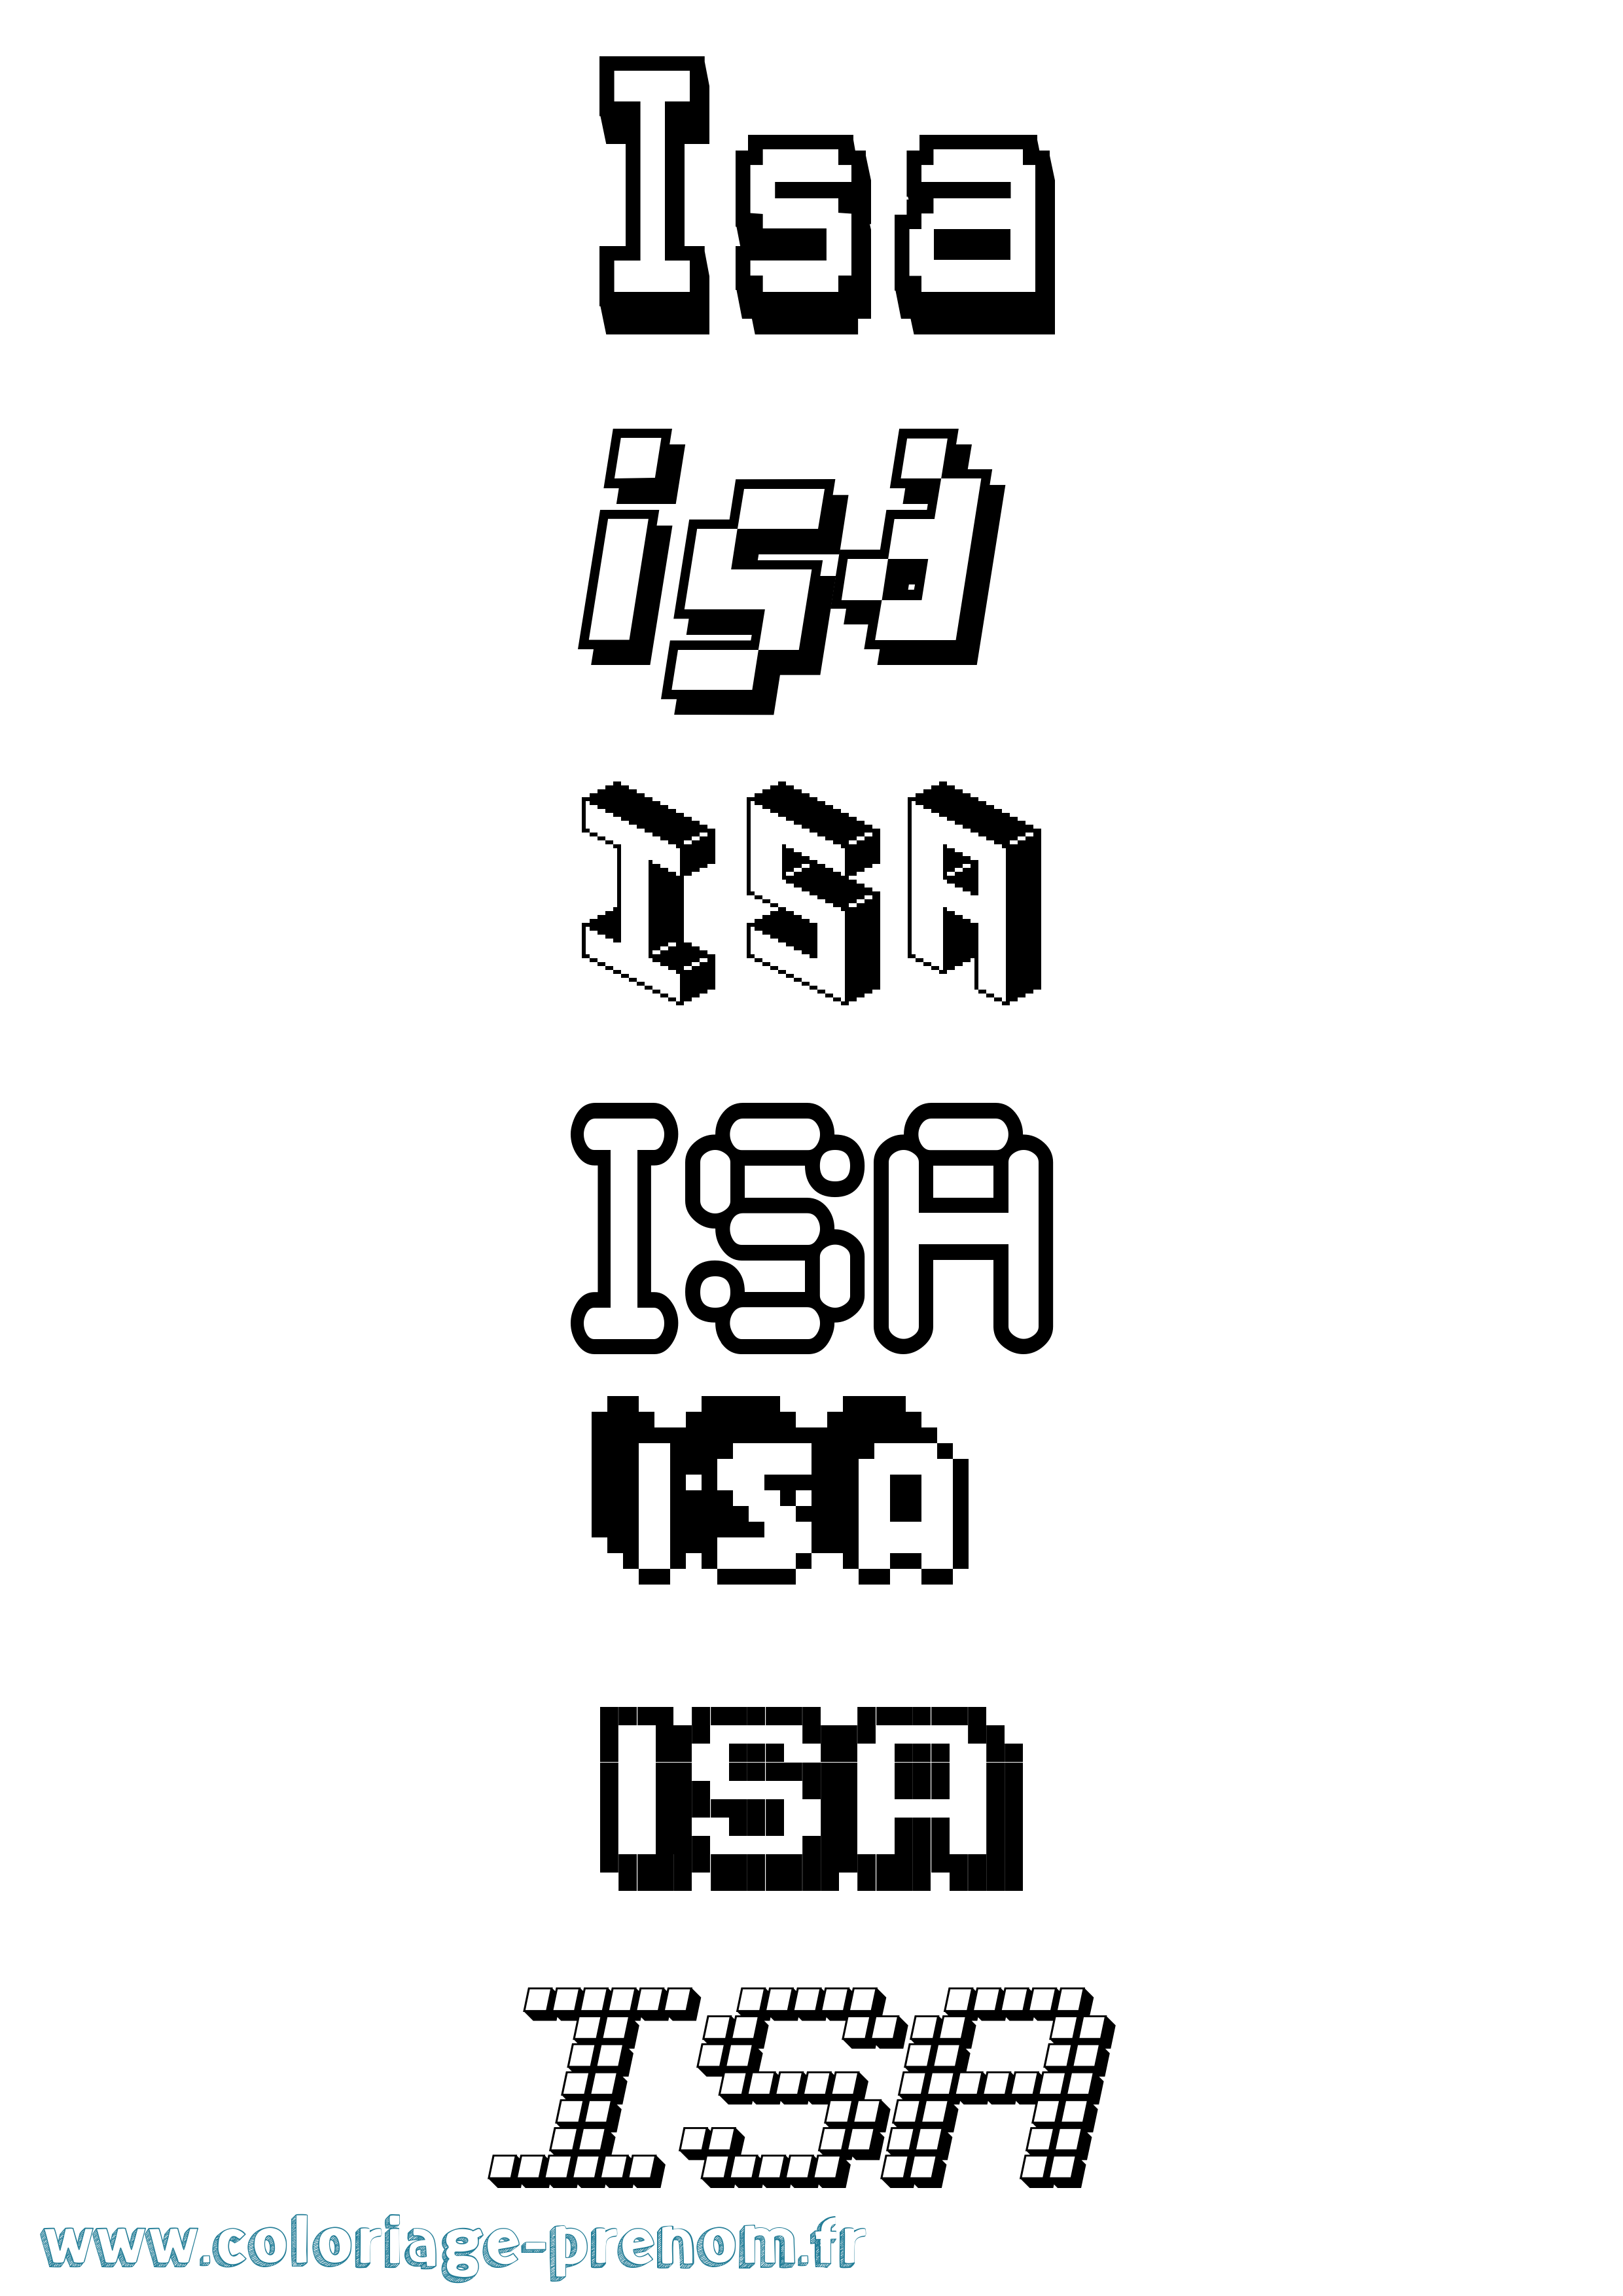 Coloriage prénom Isa Pixel